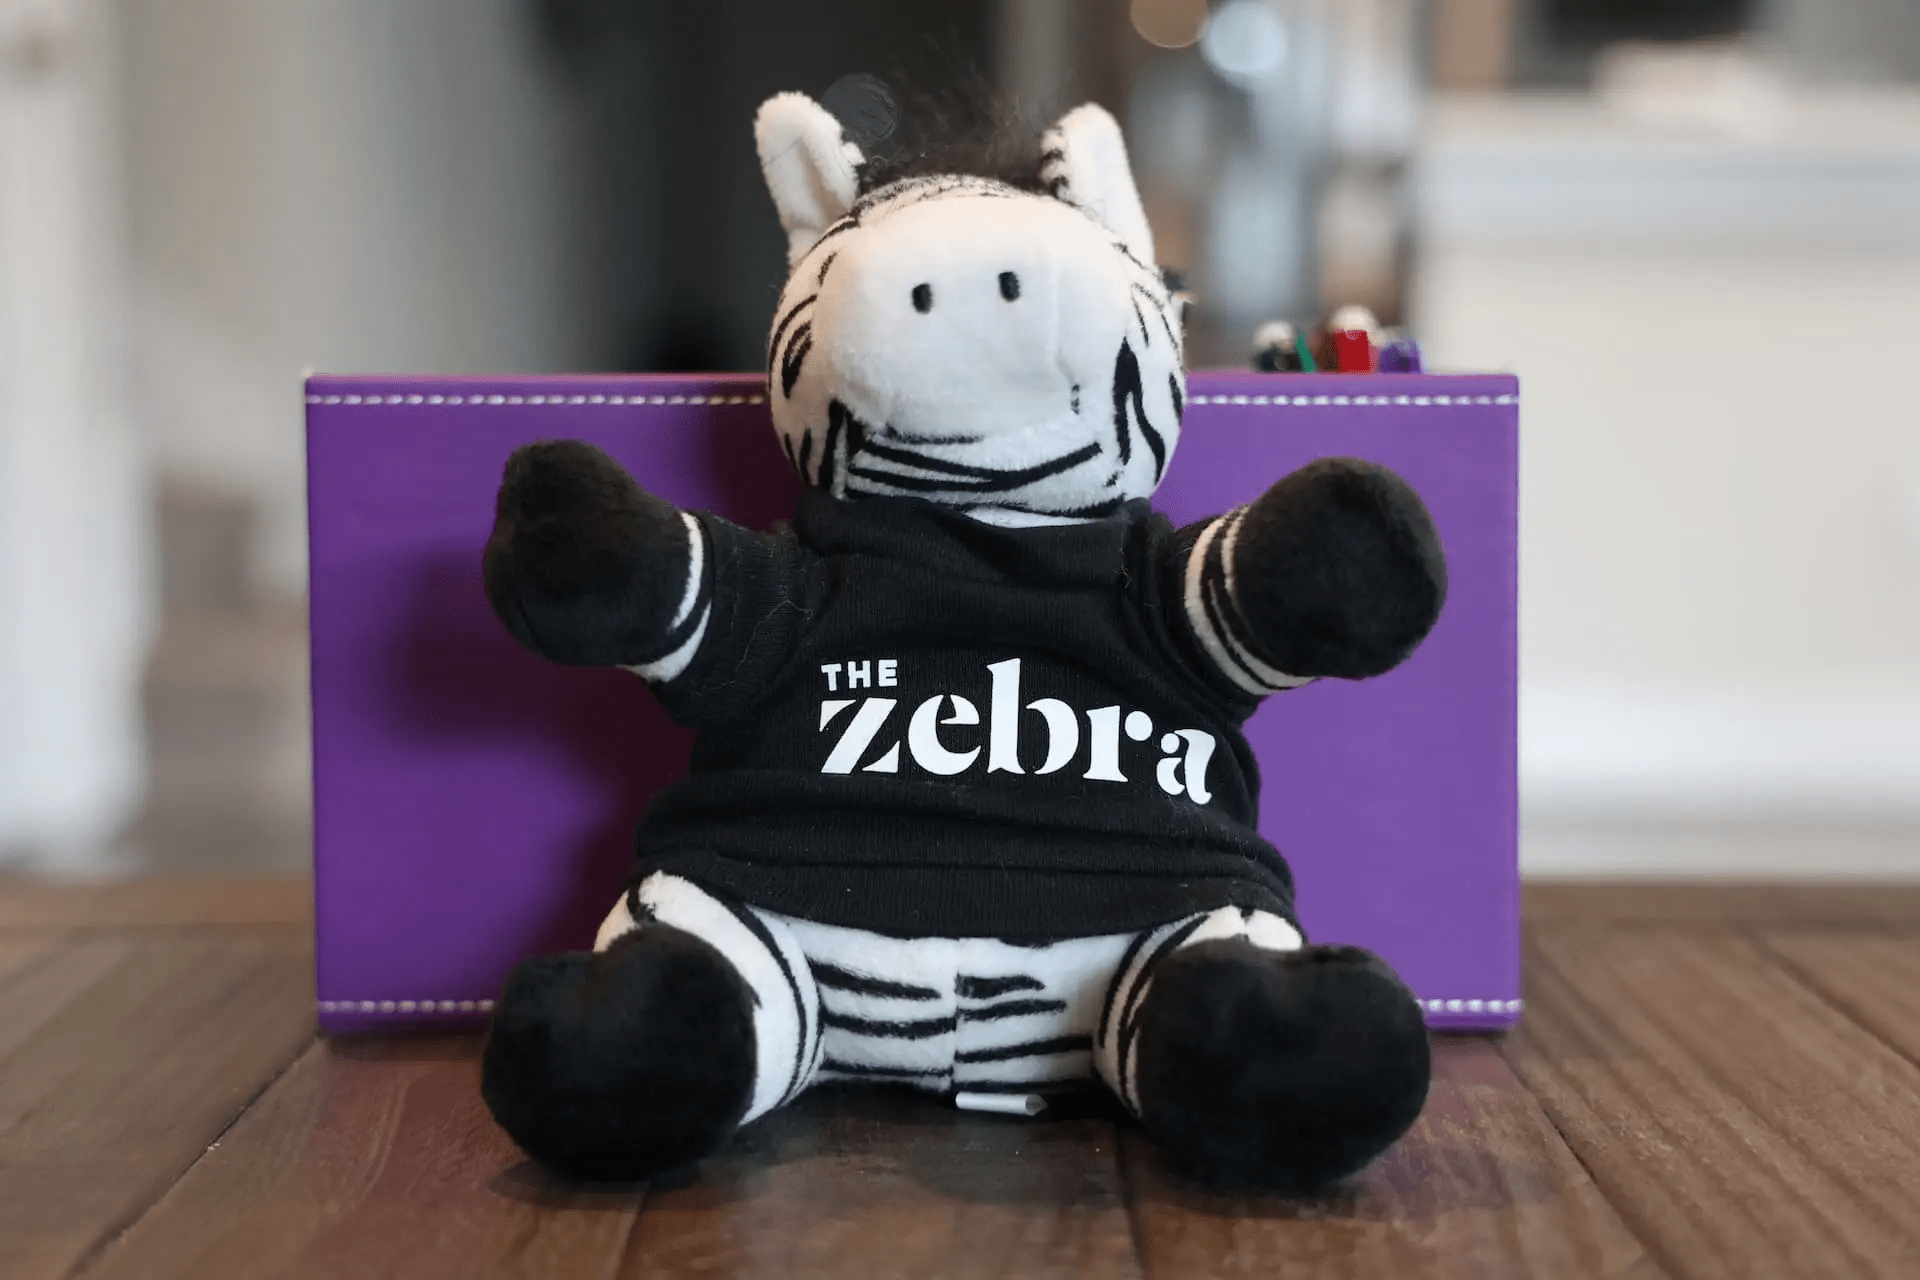 A stuffed Zebra wearing a black t-shirt with The Zebra logo on it